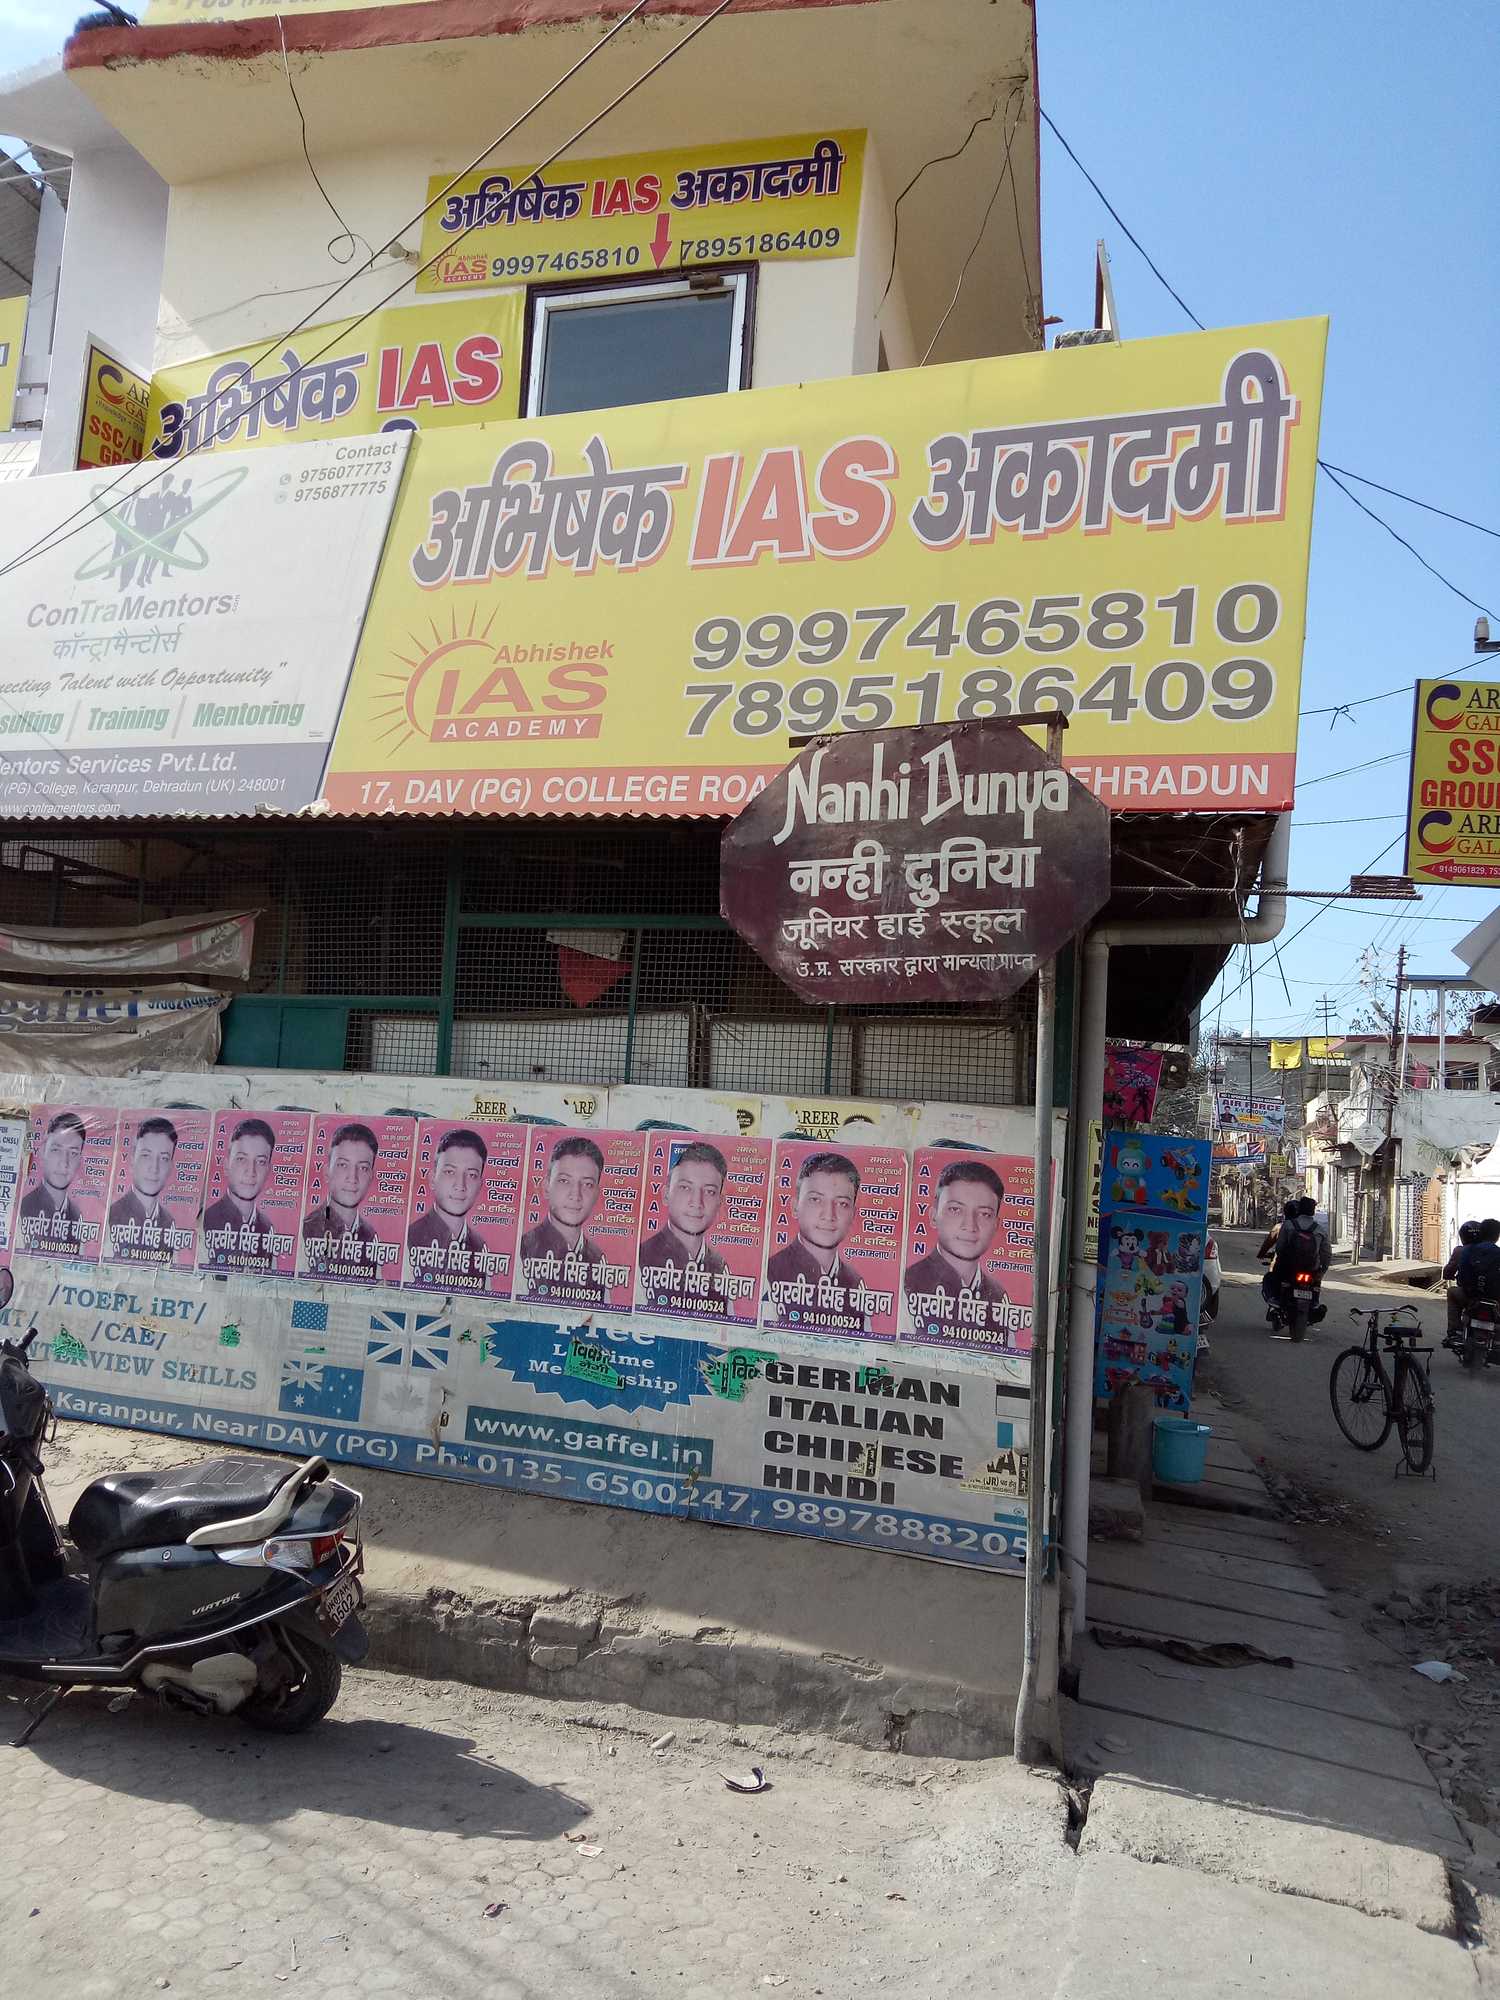 ssAbhishek IAS Academy Dehradun Uttarakhand